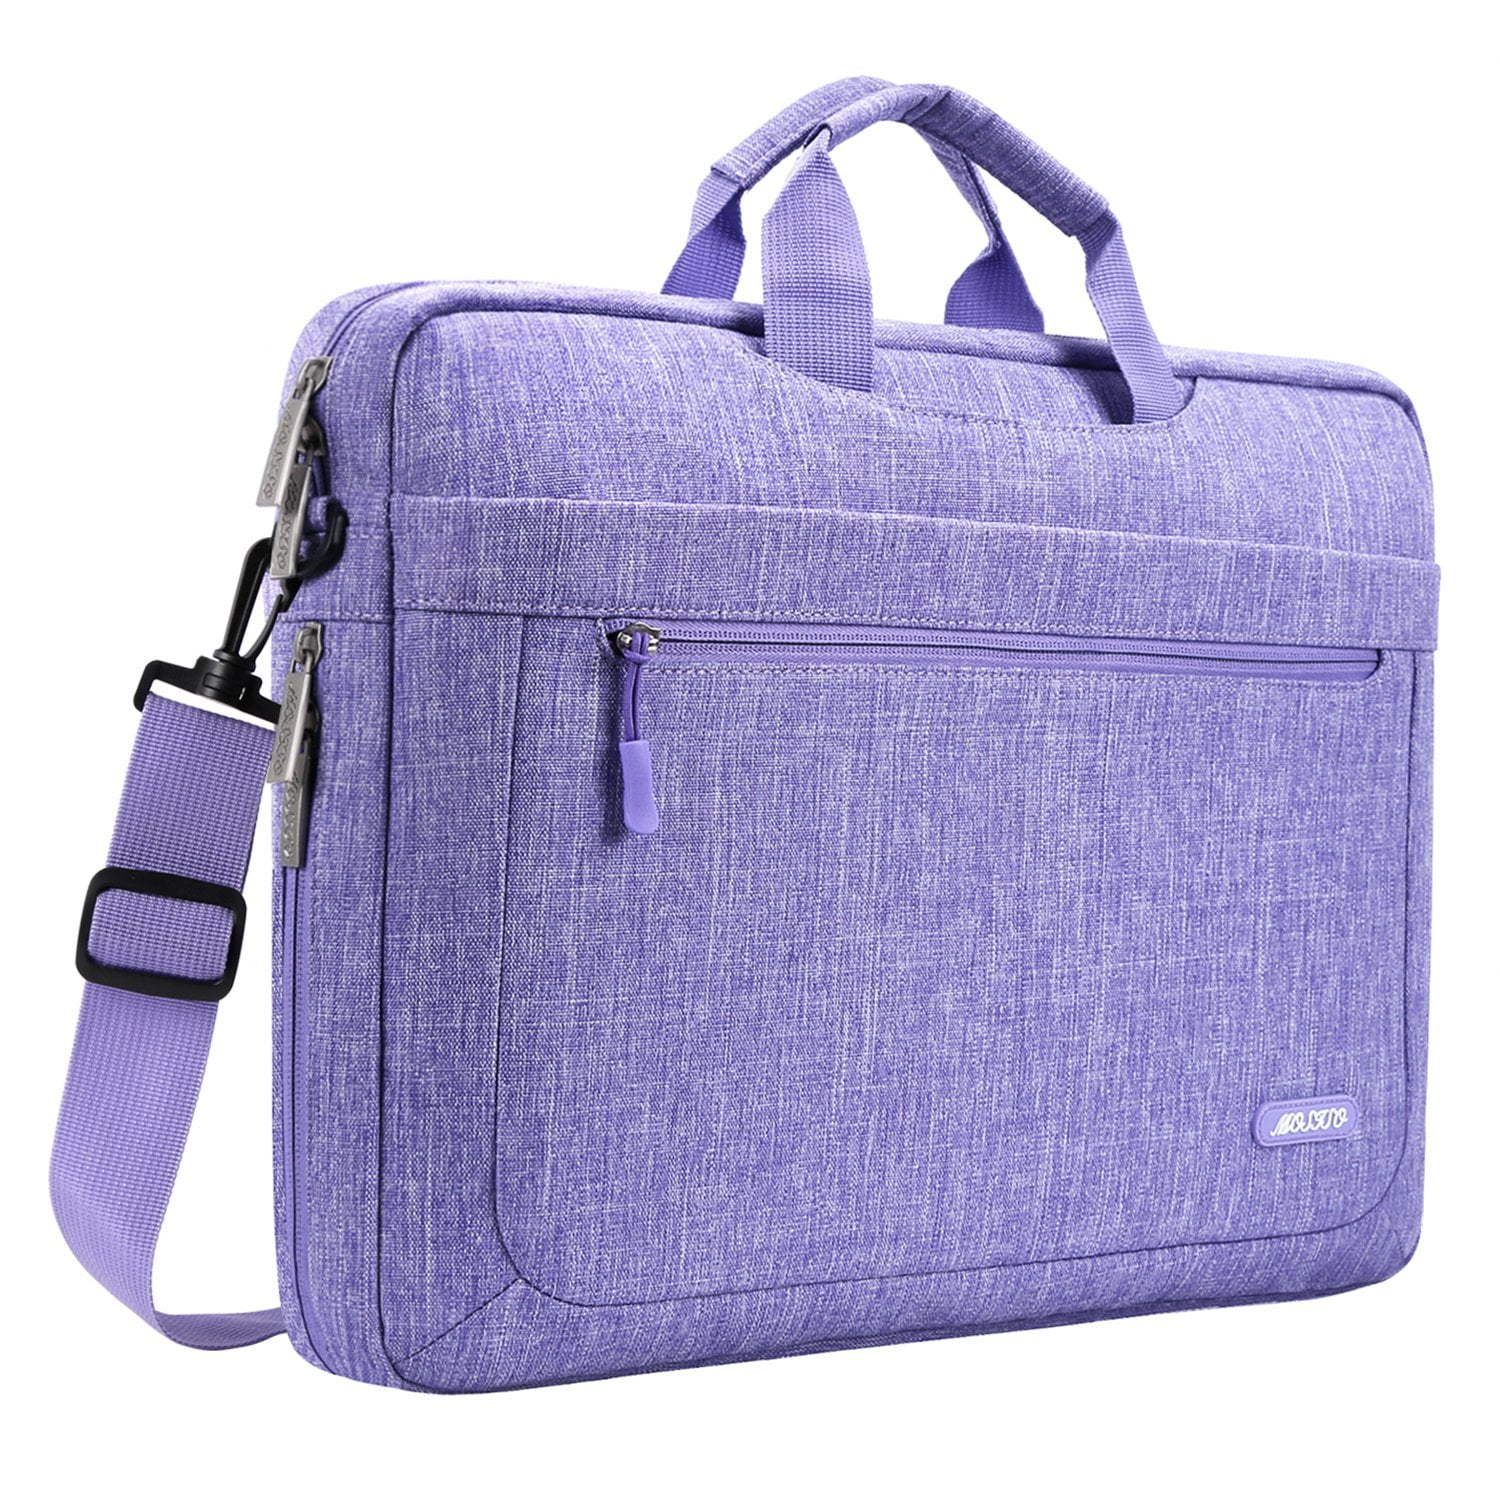 Briefcase Laptop Case 911 America Patriot Day Multi-Functional Women Satchel Handbags Fit for 15 Inch Computer Notebook MacBook